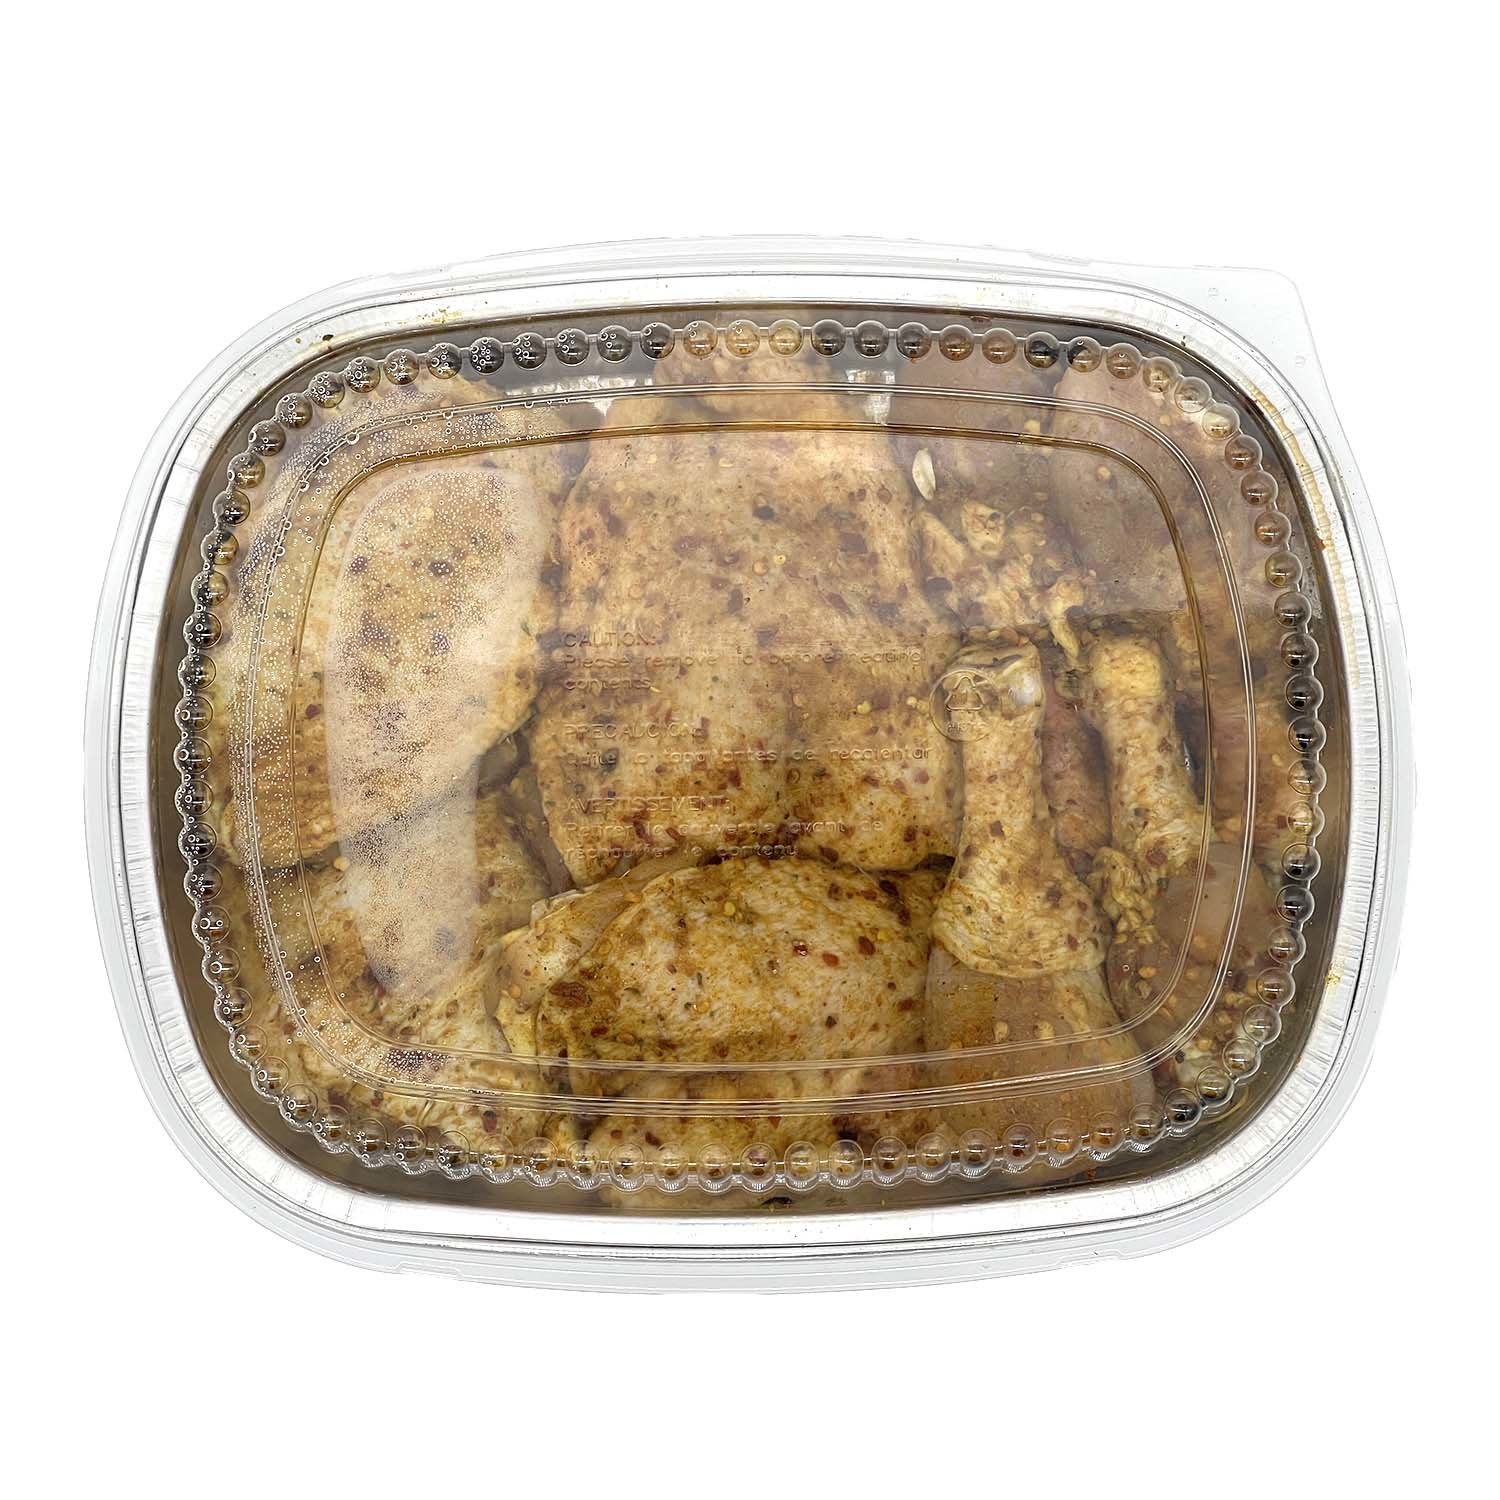 .com : Louisiana Popcorn Rice Gourmet - 2 Pound Cloth Sack